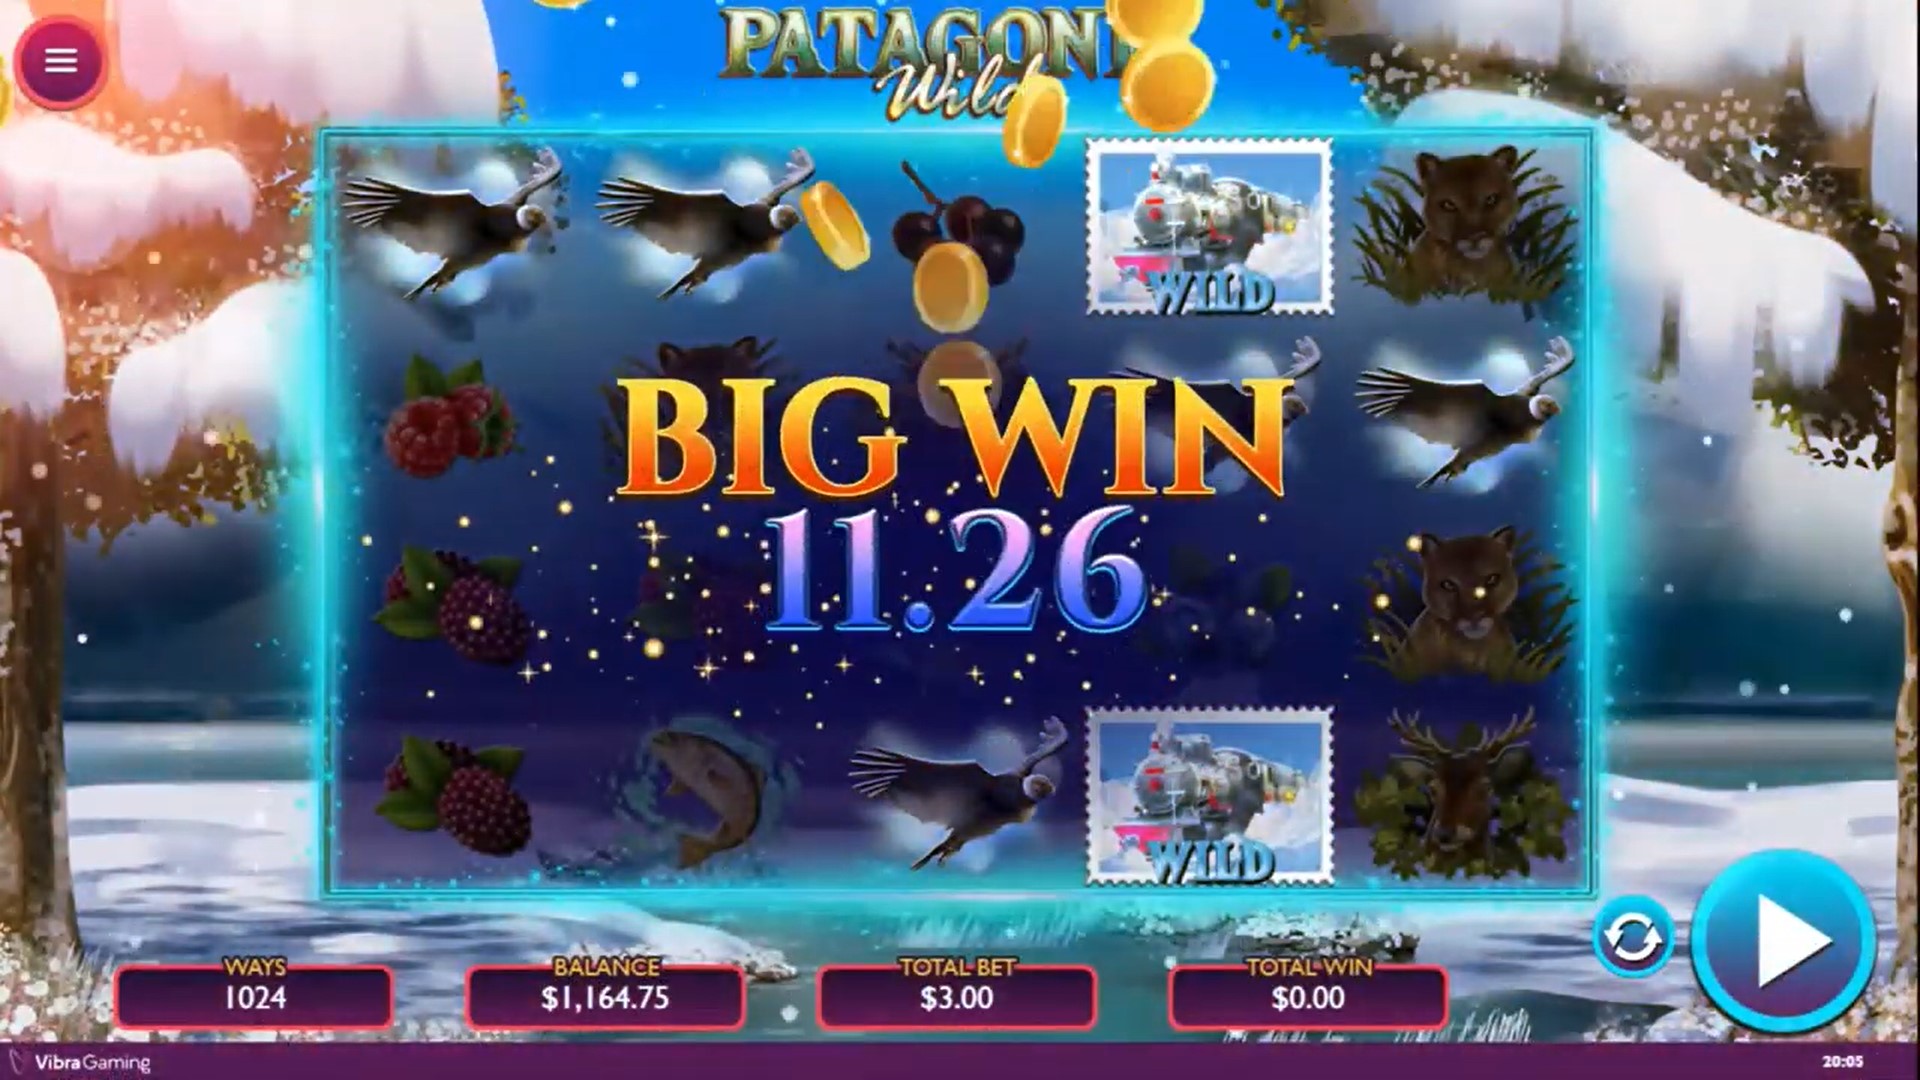 Patagonia Wild big win Vibra Gaming